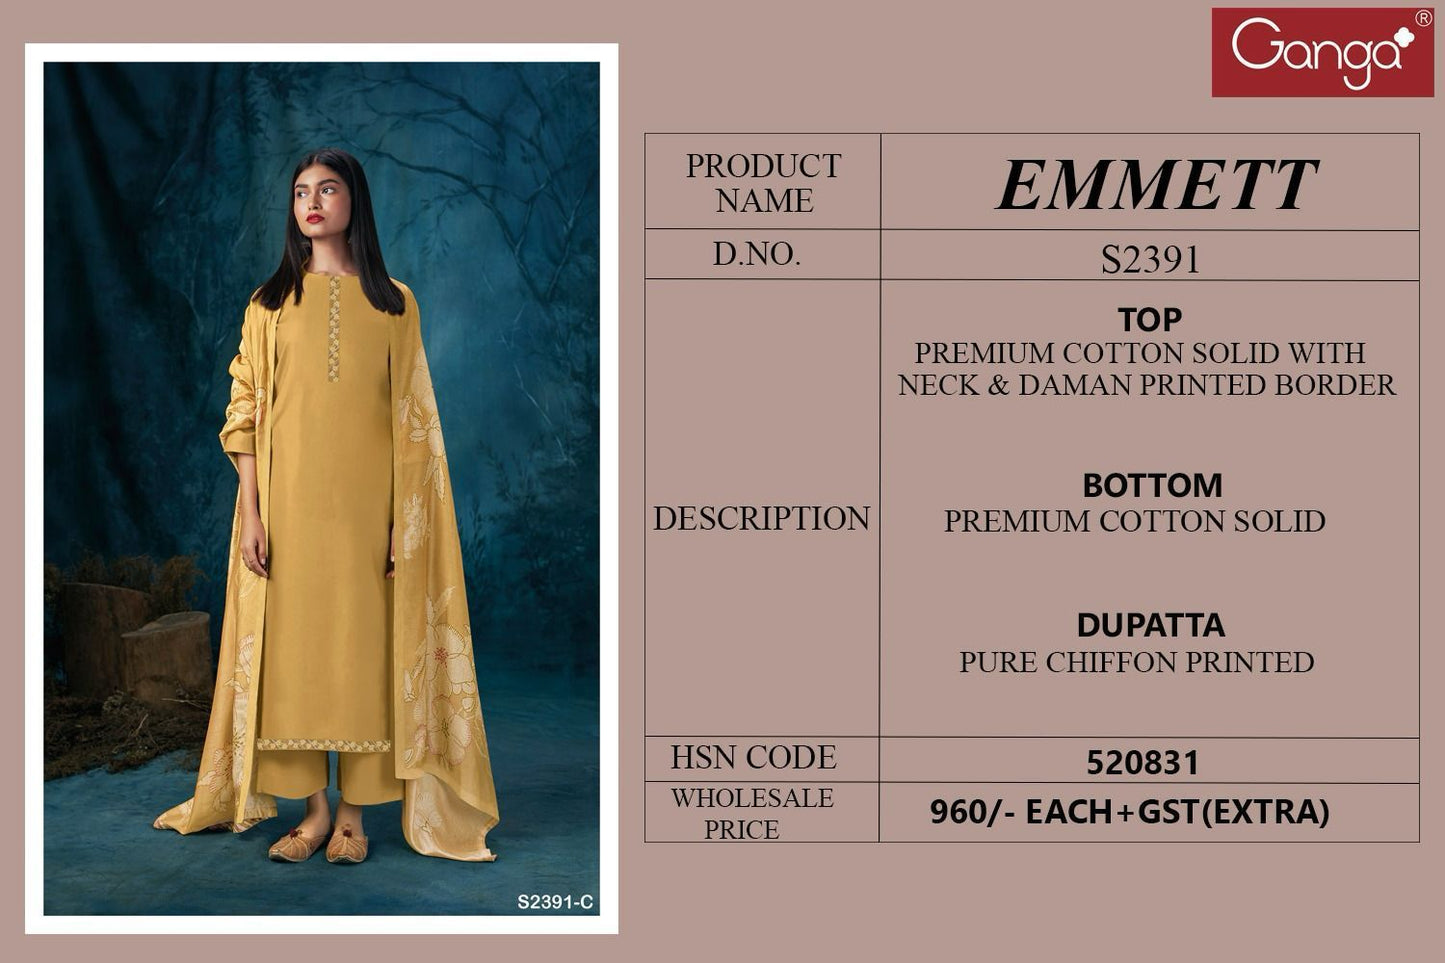 Emmett 2391 Ganga Cotton Solid Plazzo Style Suits